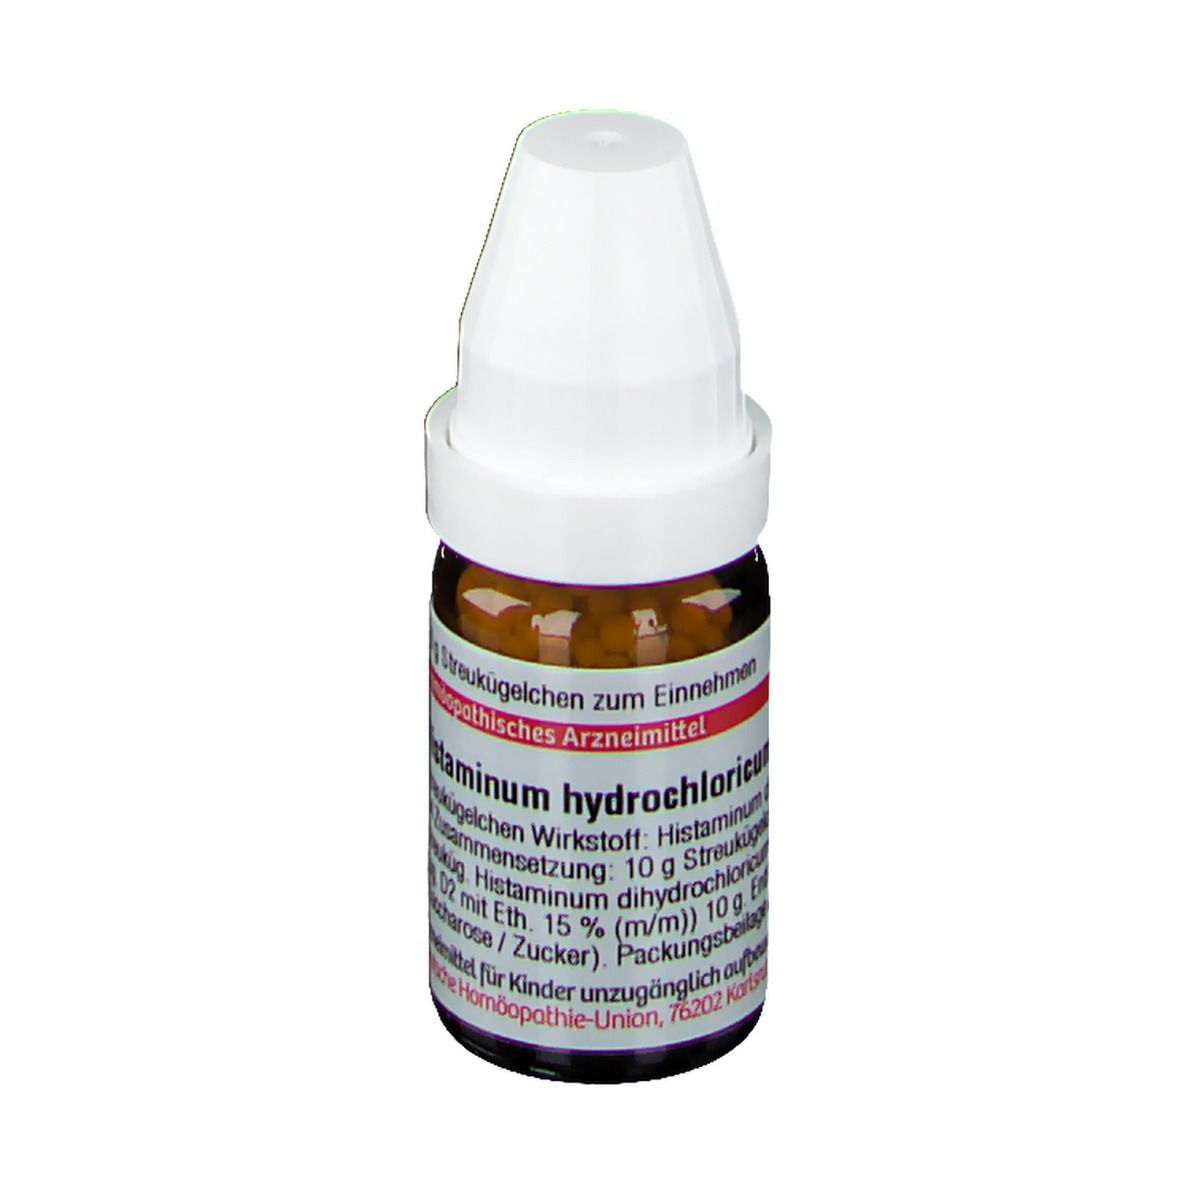 DHU Histaminum Hydrochloricum D4